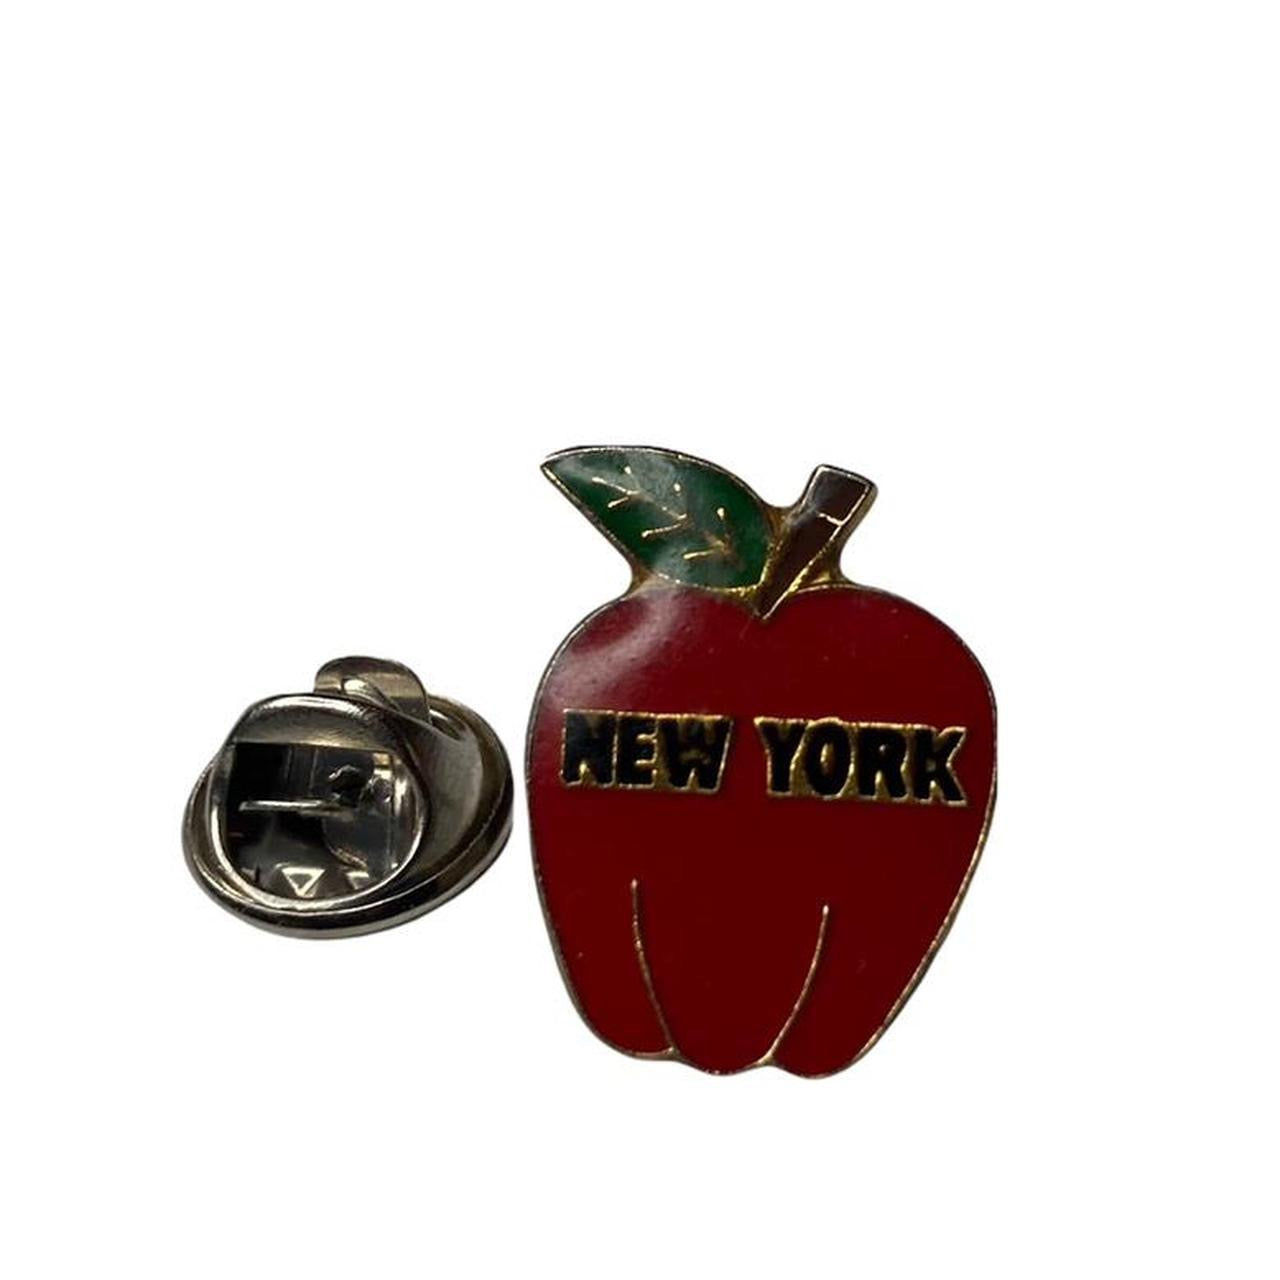 70s Vintage New York lapel pin